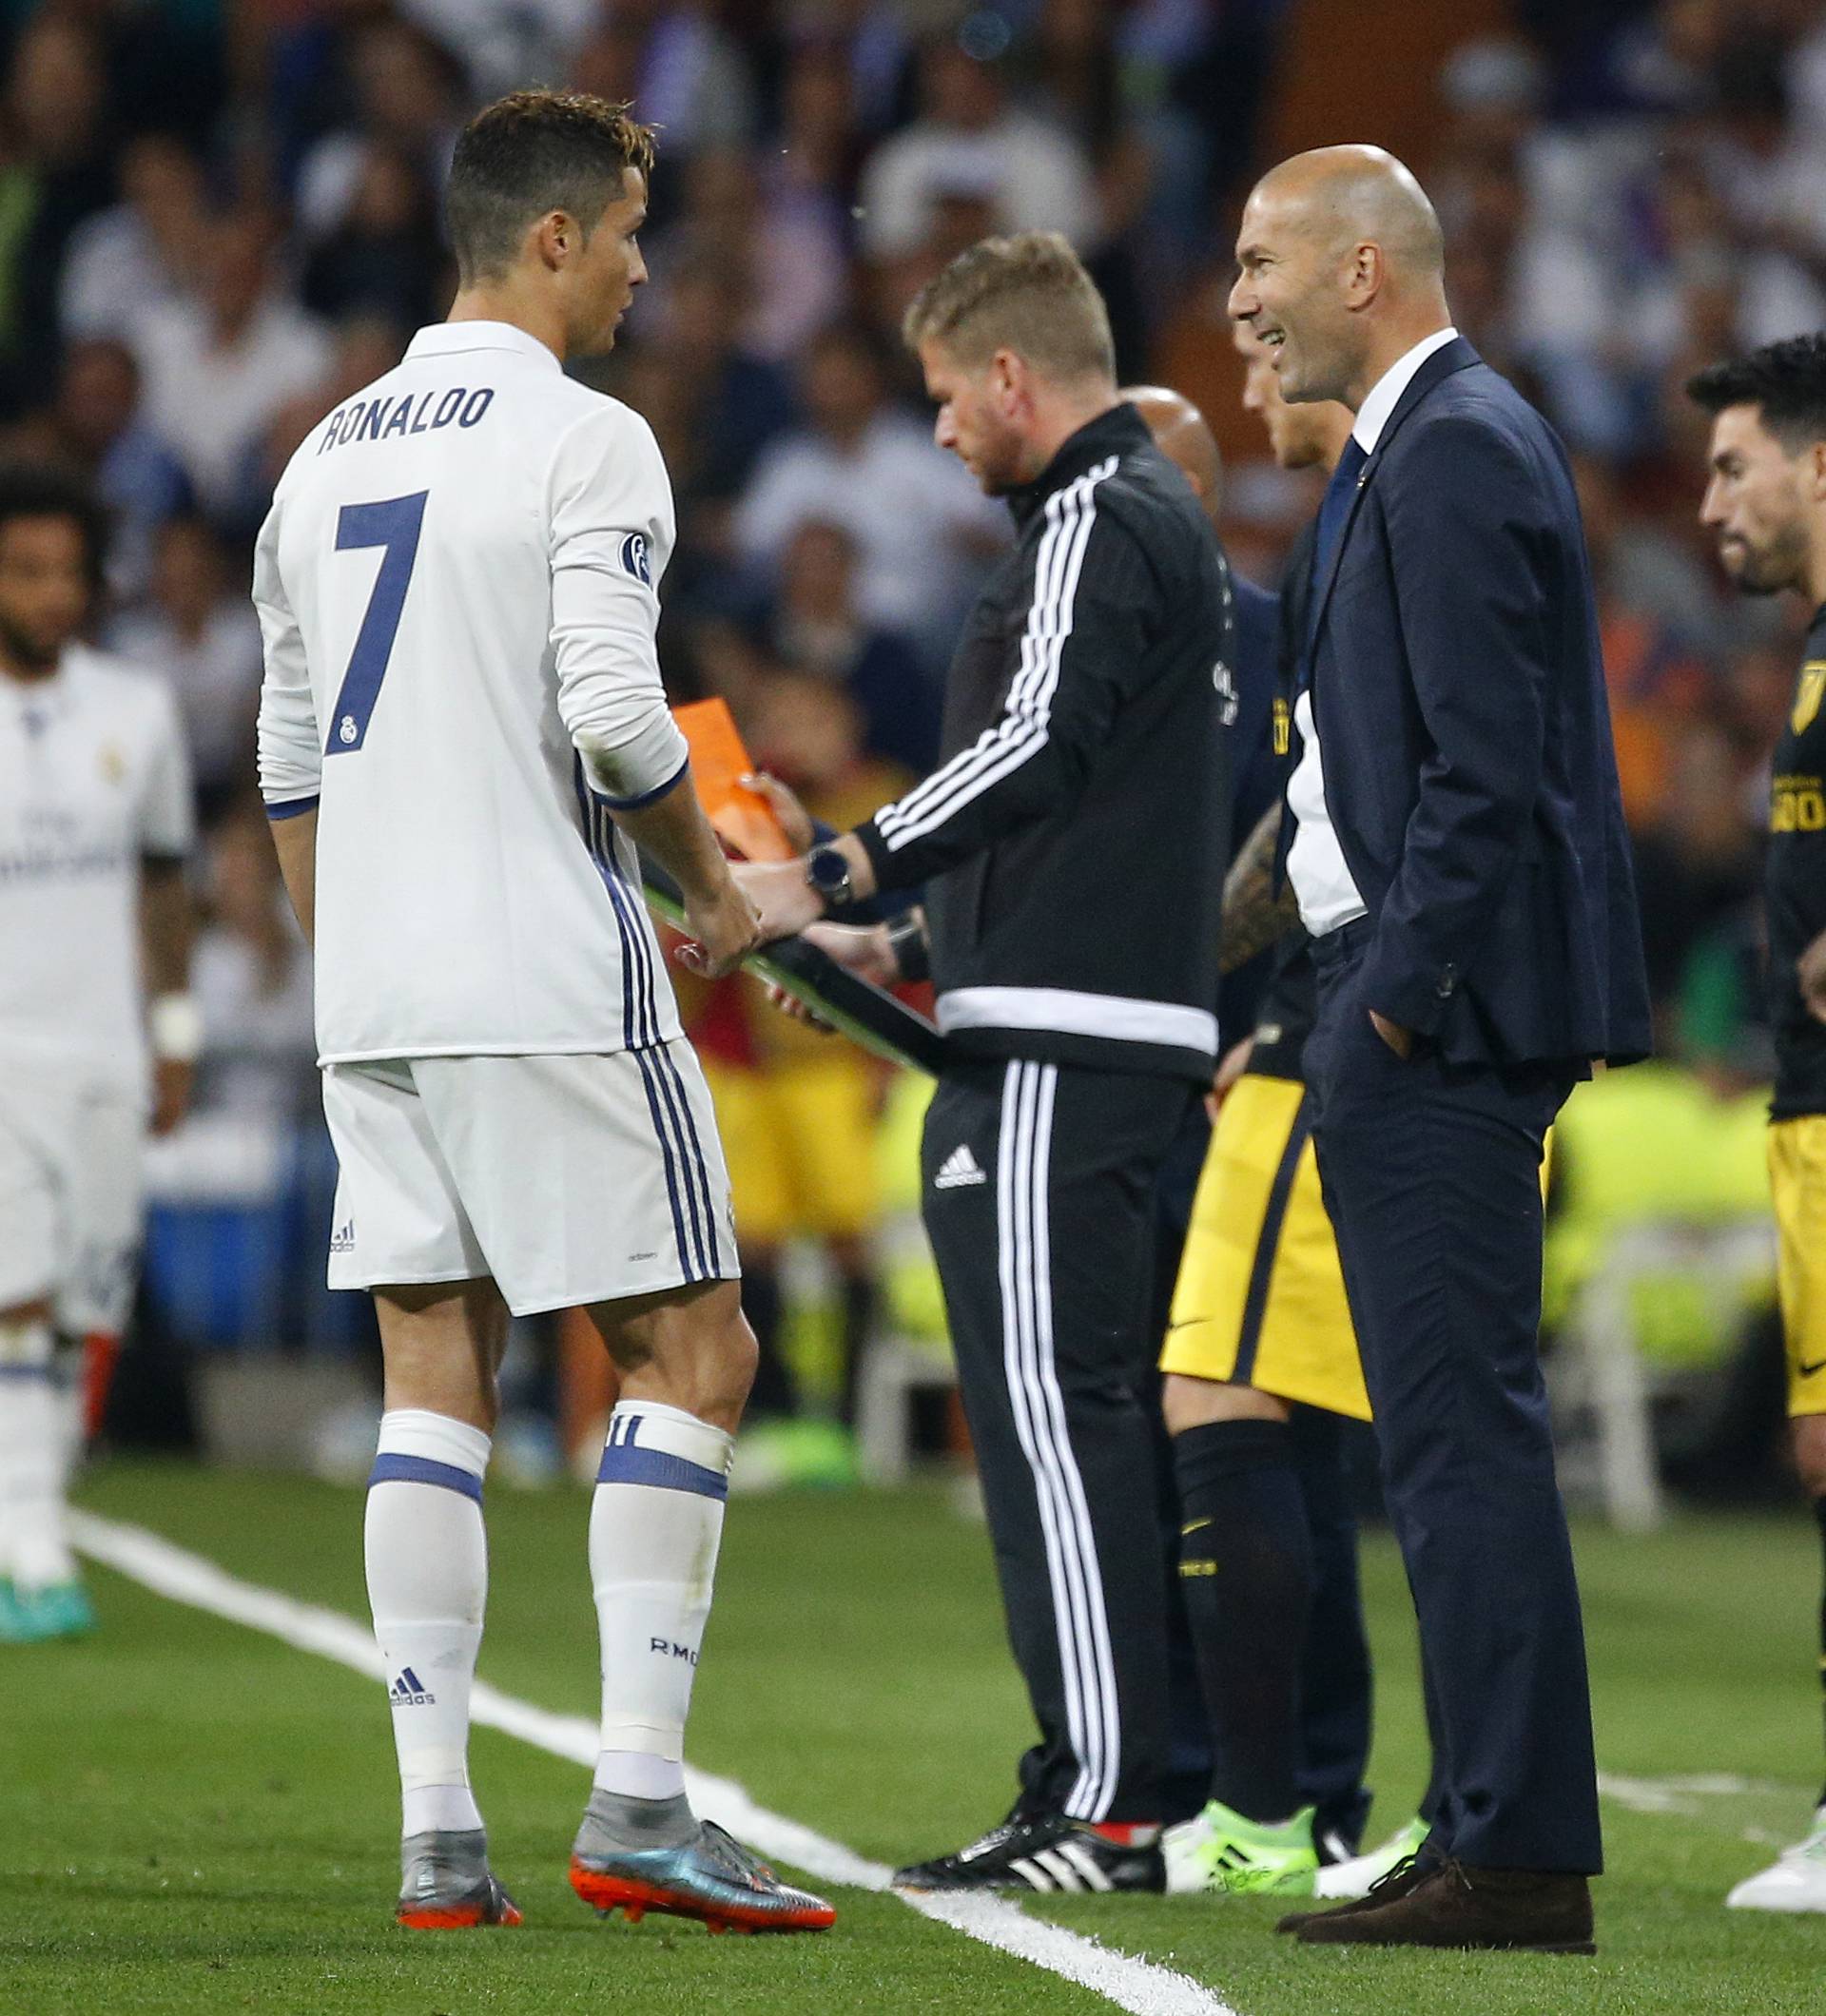 Real Madrid's Cristiano Ronaldo and Real Madrid coach Zinedine Zidane